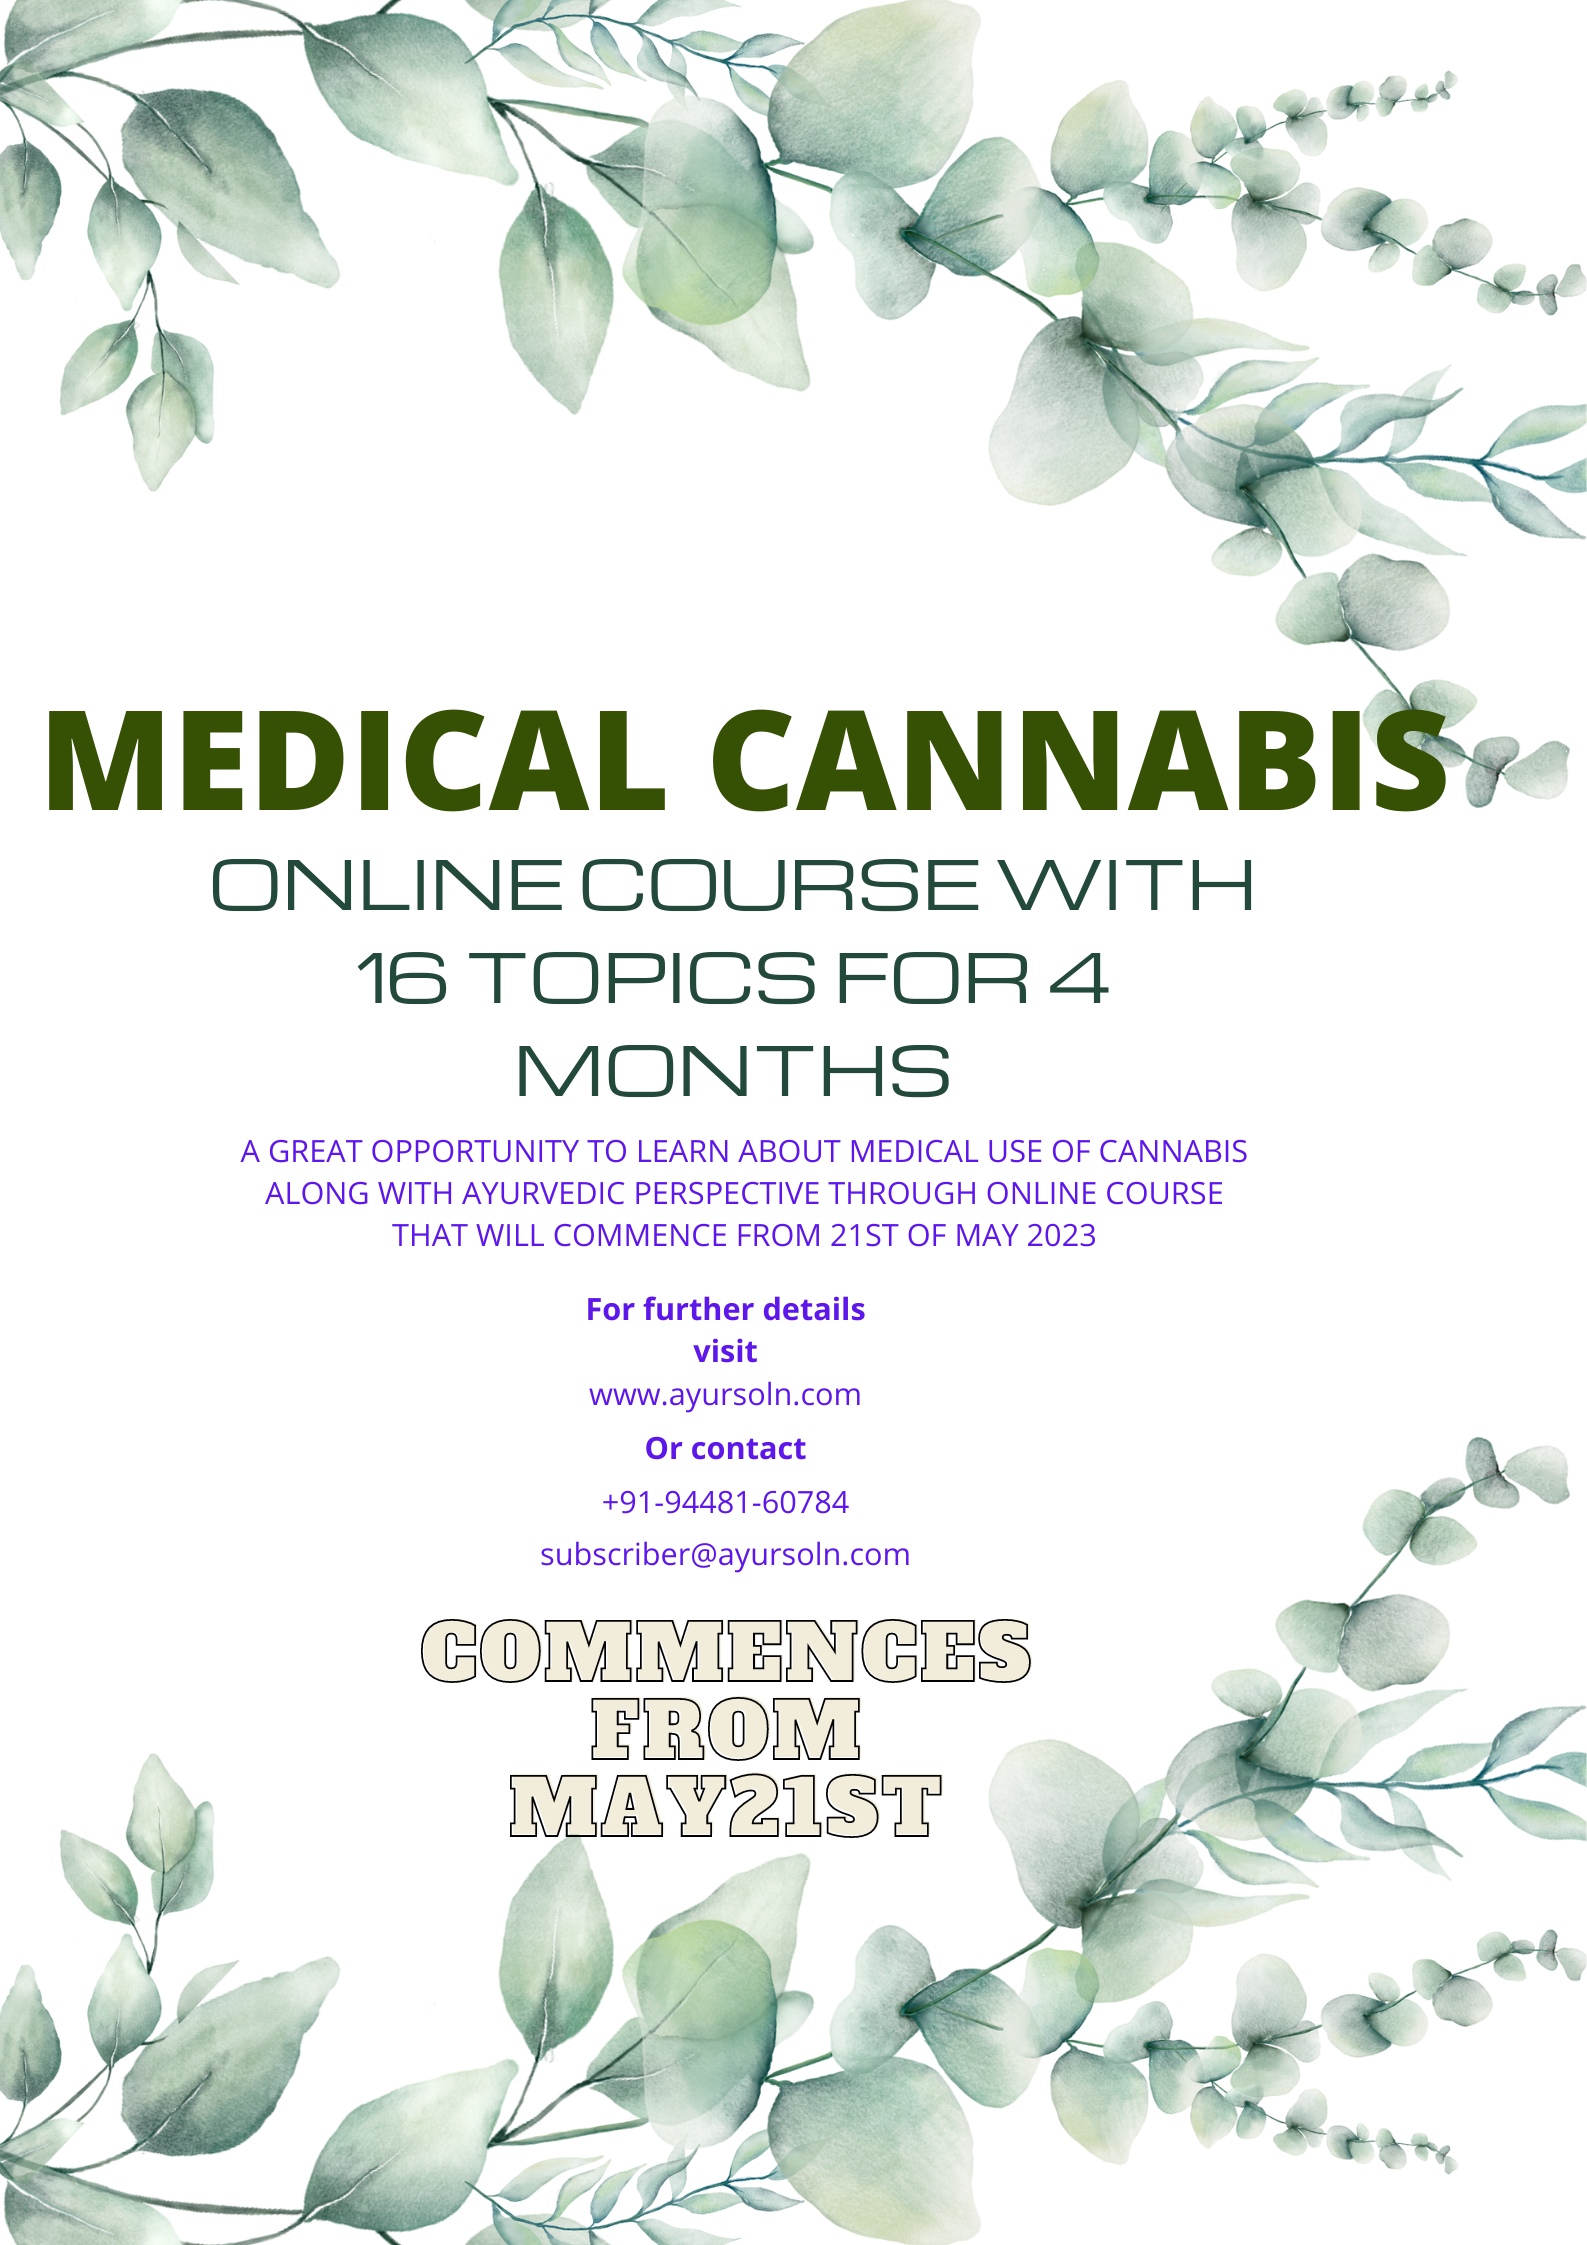 Online Medical Cannabis